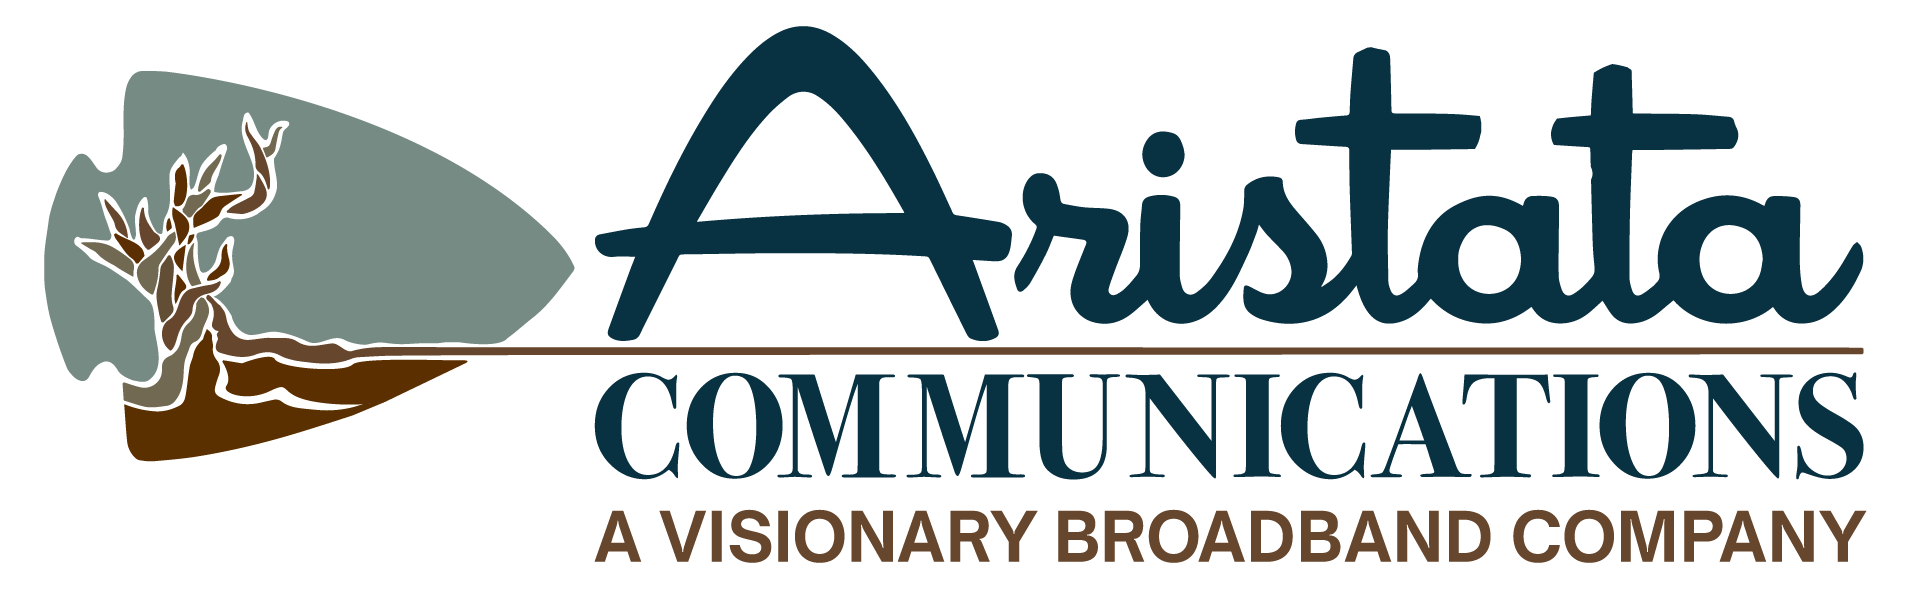 Aristata Communications - a Visionary Broadband company